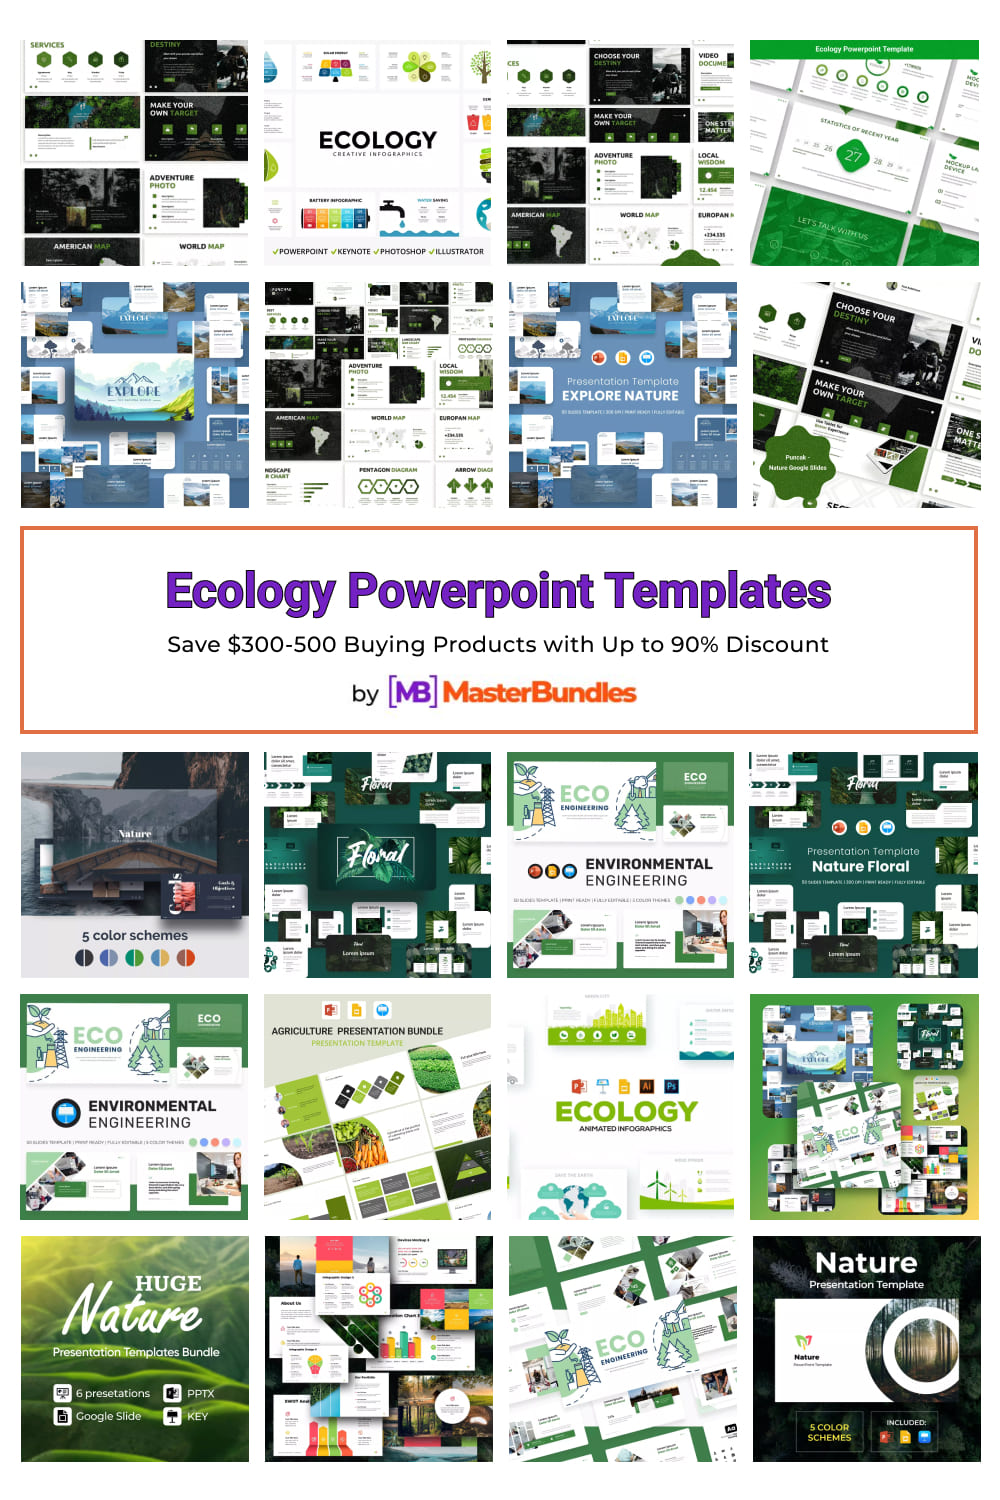 Ecology Powerpoint Templates Pinterest image.